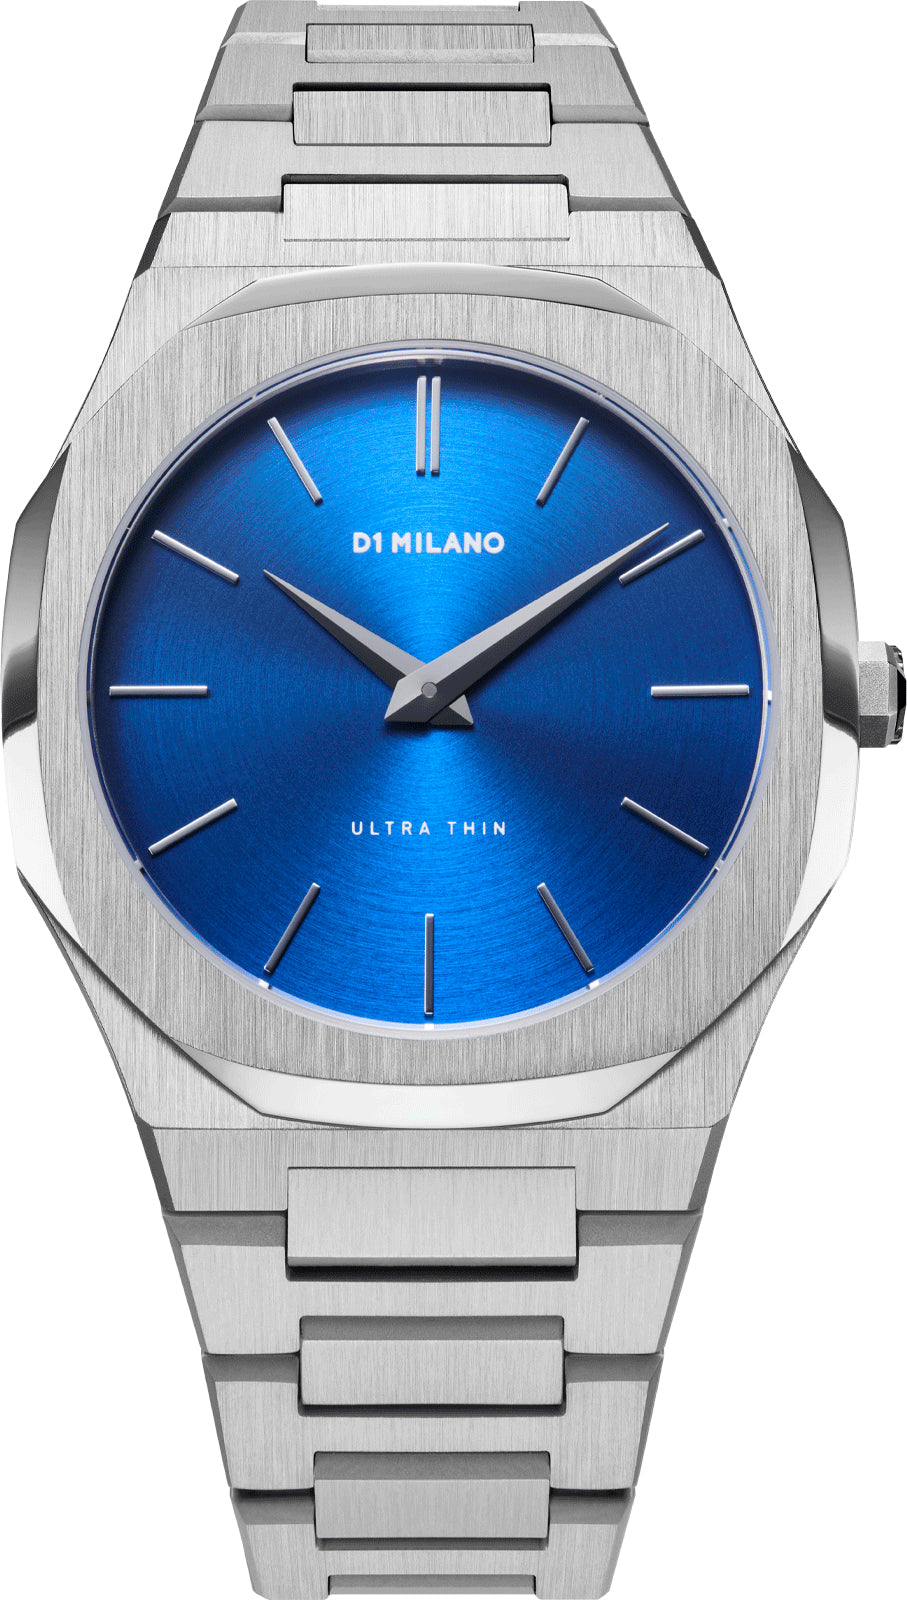 Photos - Wrist Watch Milano D1  Watch Ultra Thin DLM-042 